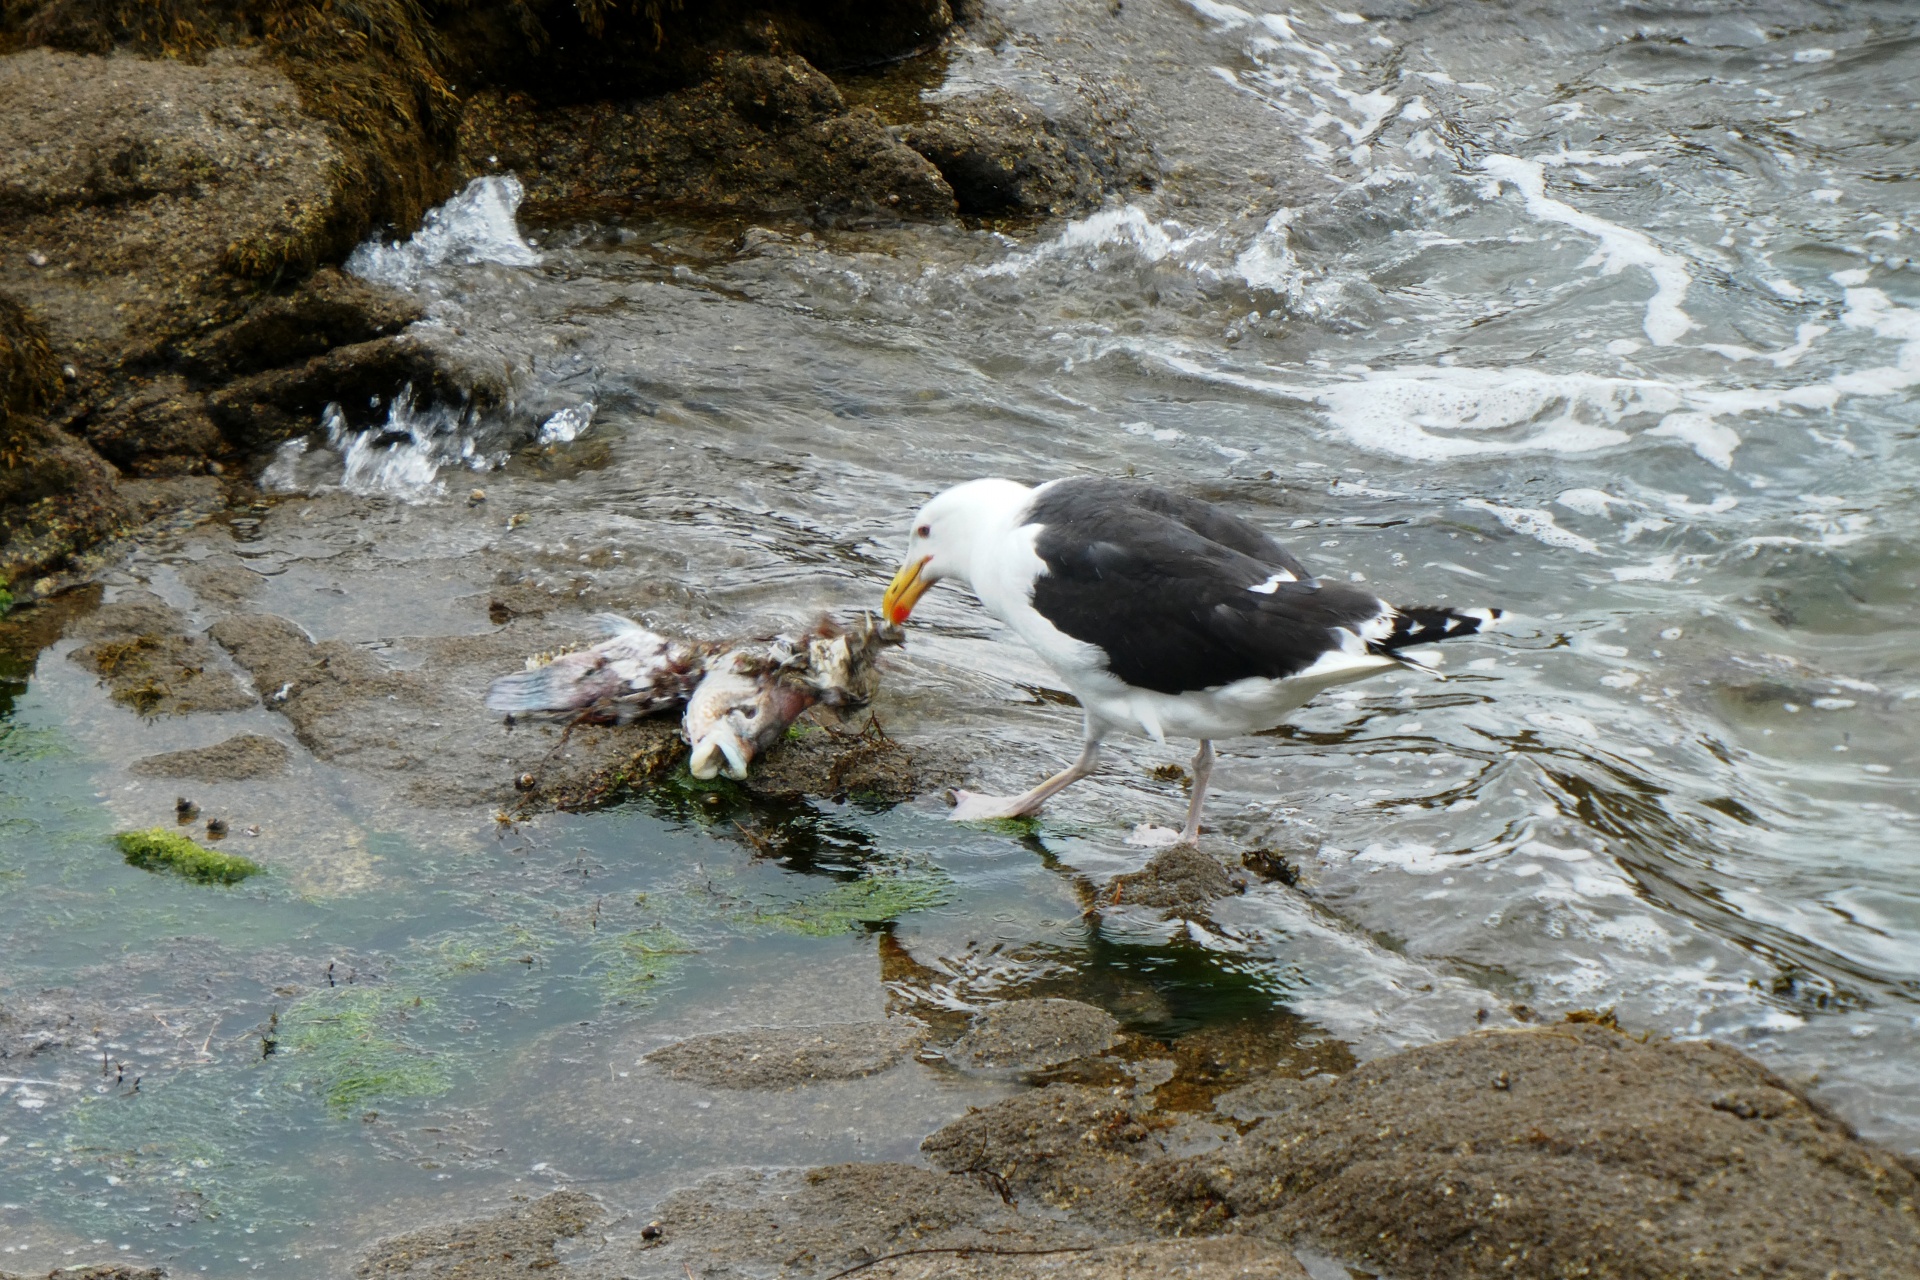 Deep sea gull devouring a fish